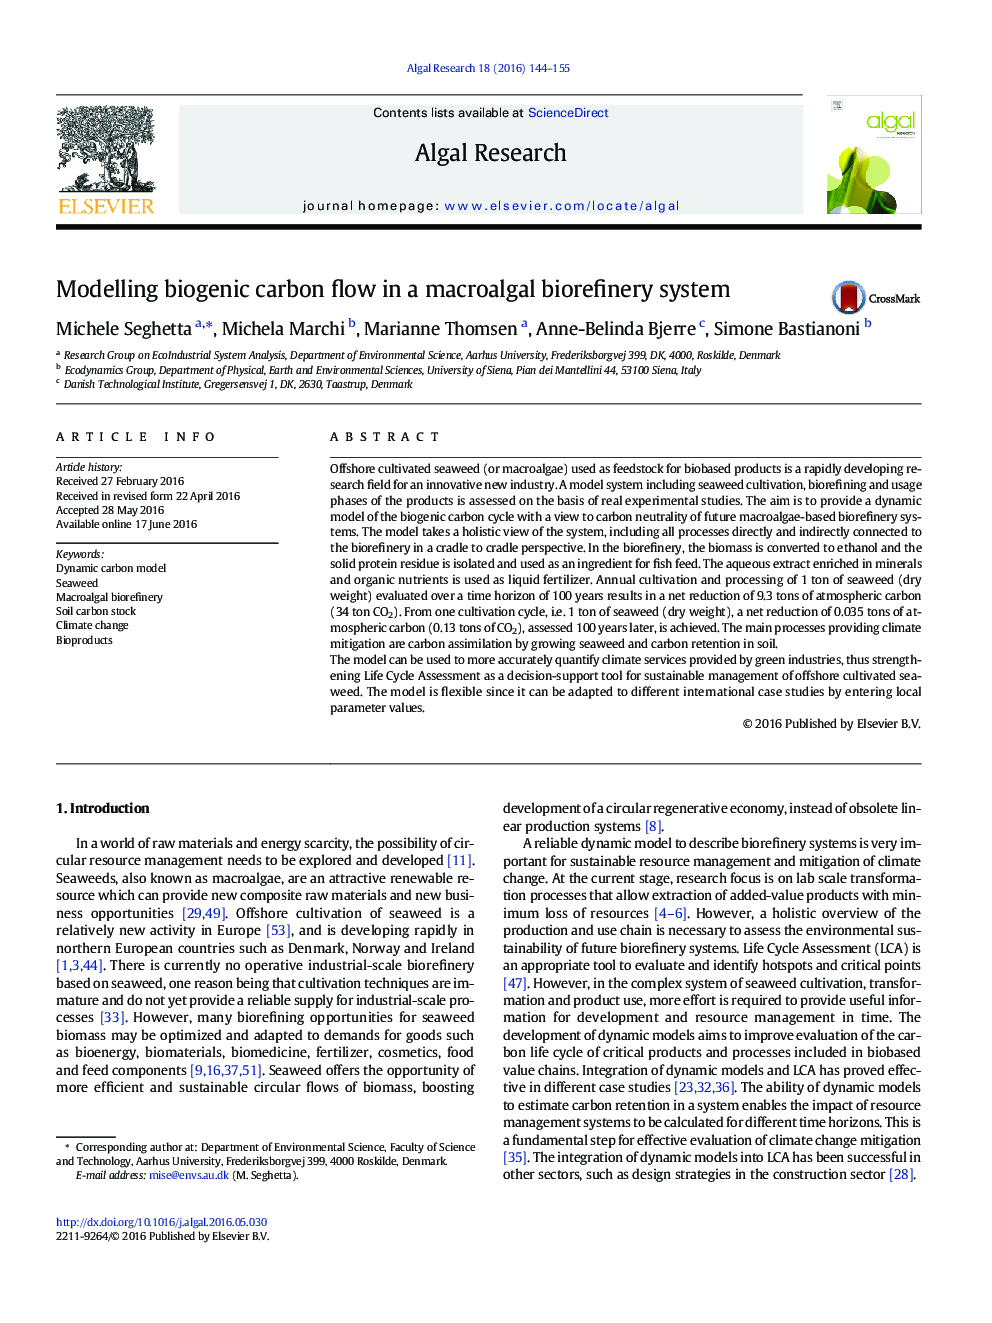 Modelling biogenic carbon flow in a macroalgal biorefinery system